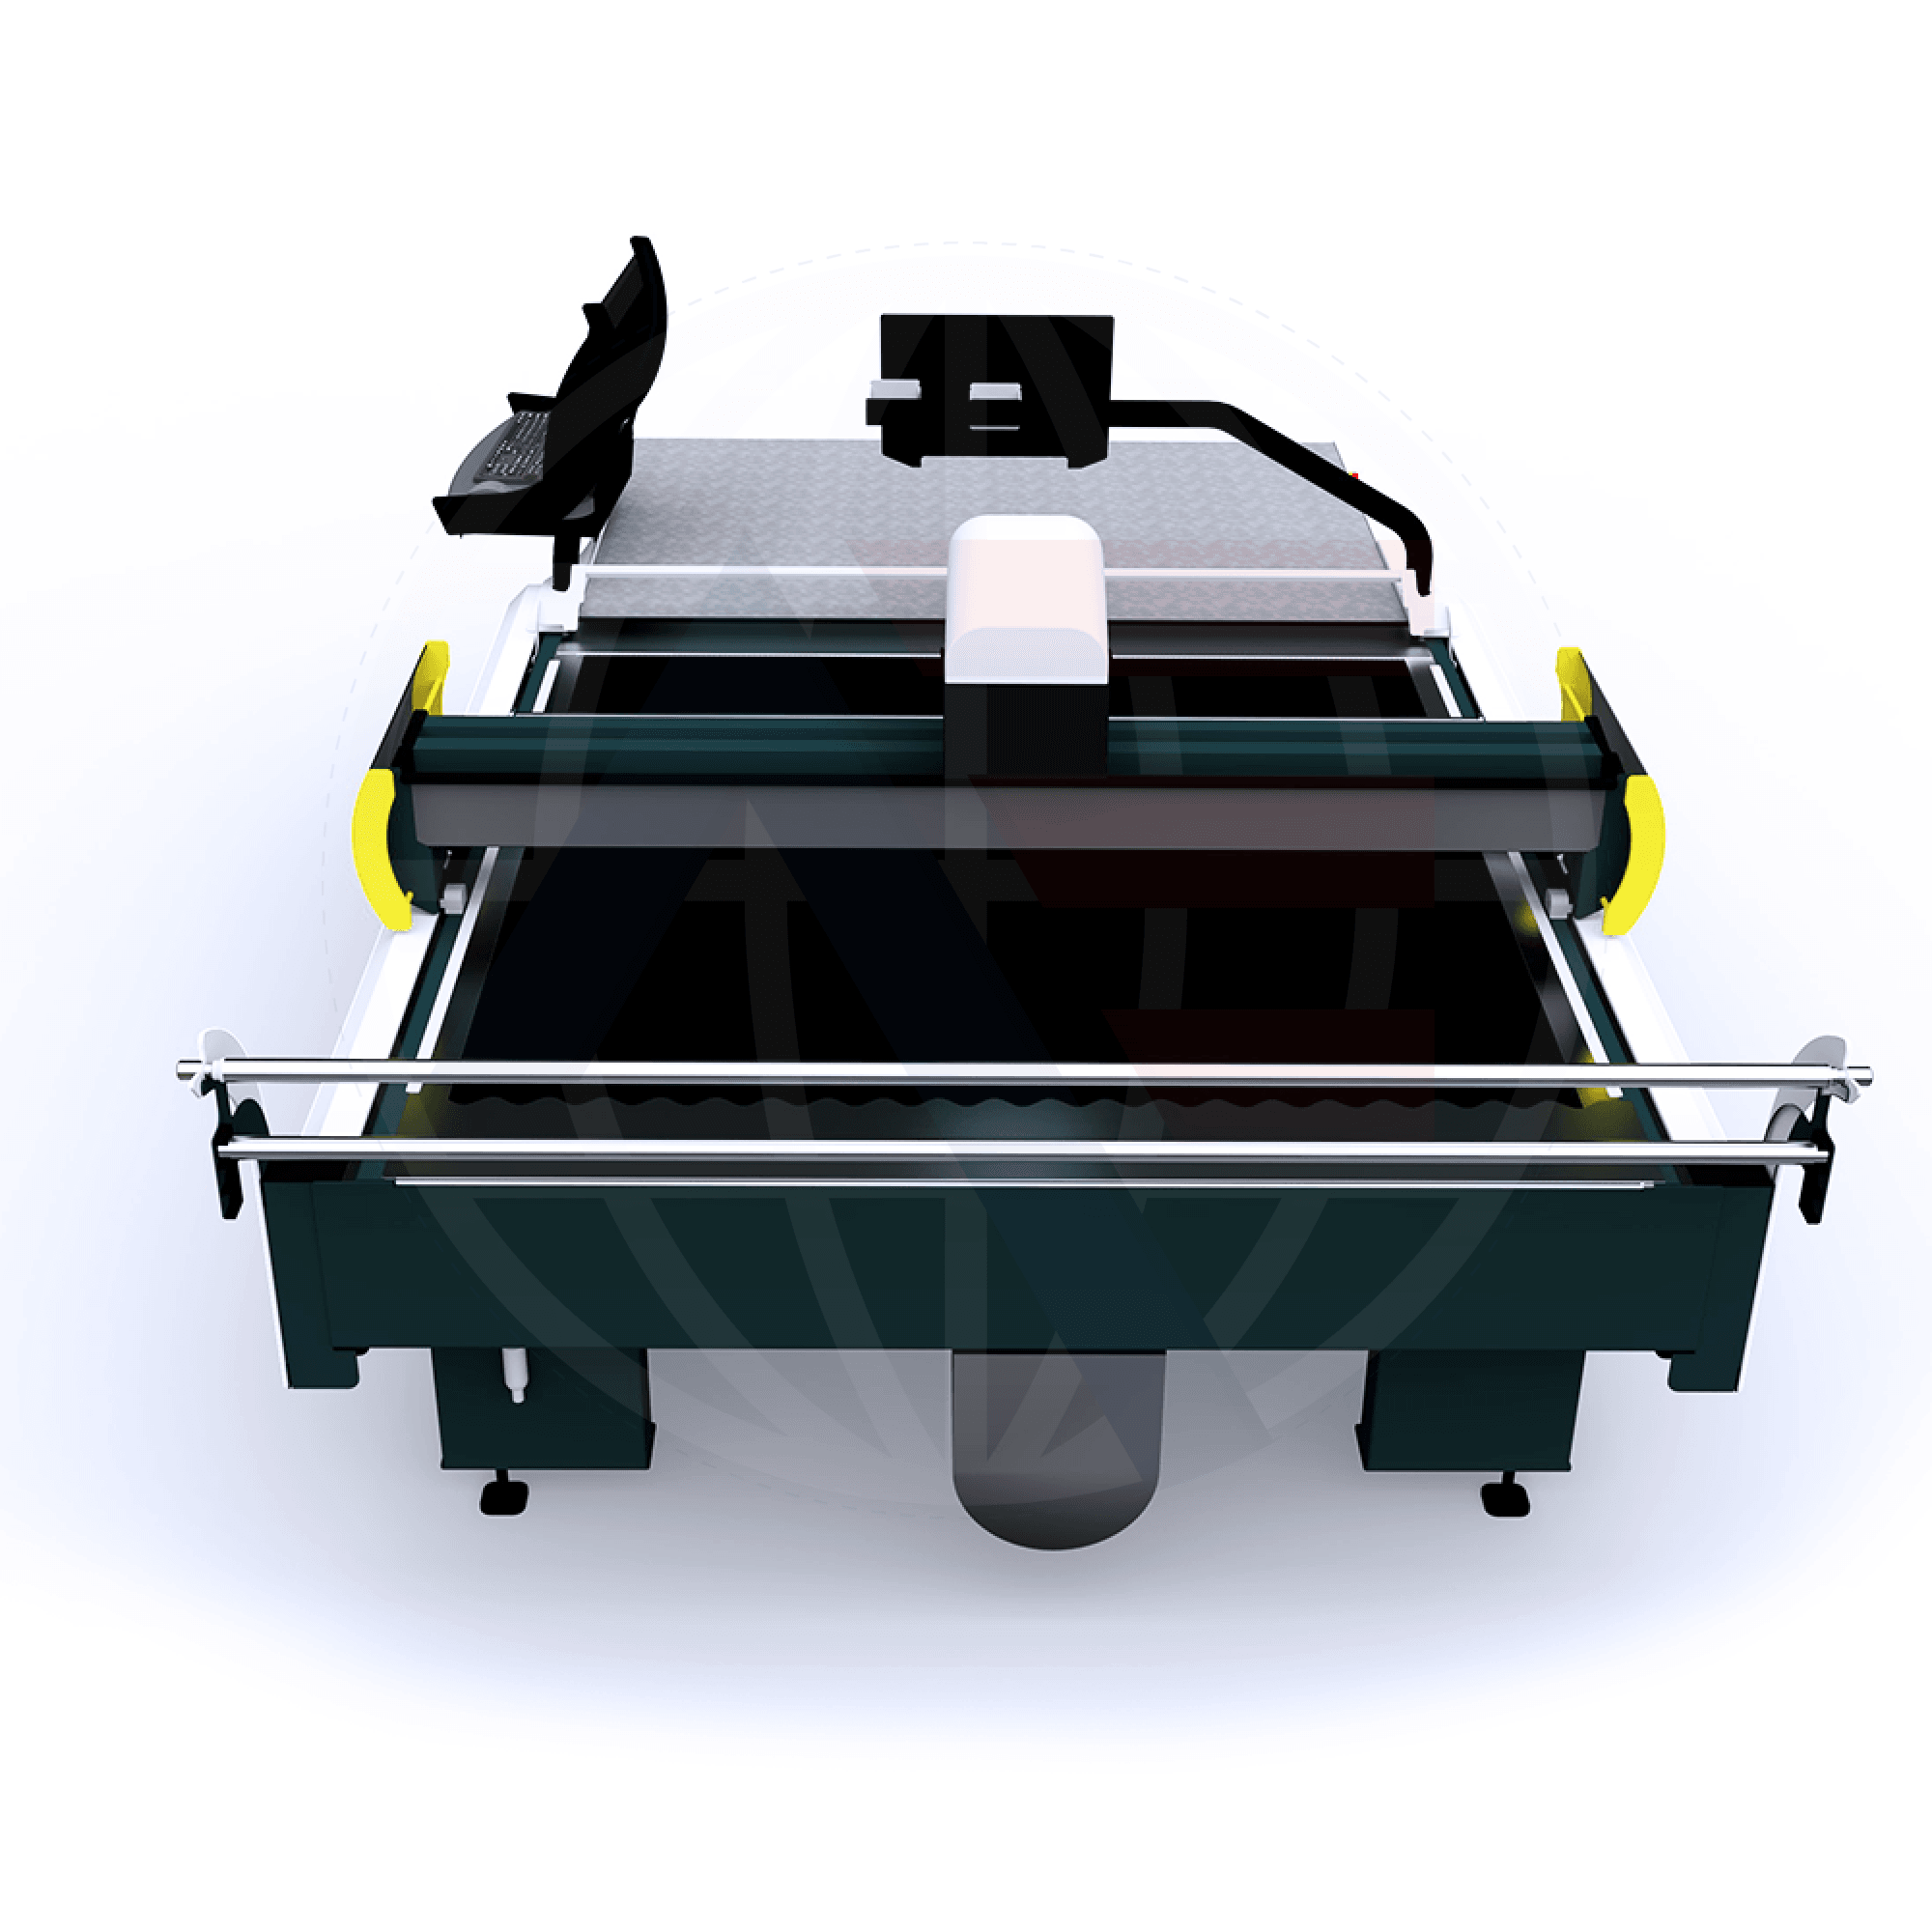 Pathfinder M-Series Multi-ply Automated Cutting Machine - AE Sewing Machines